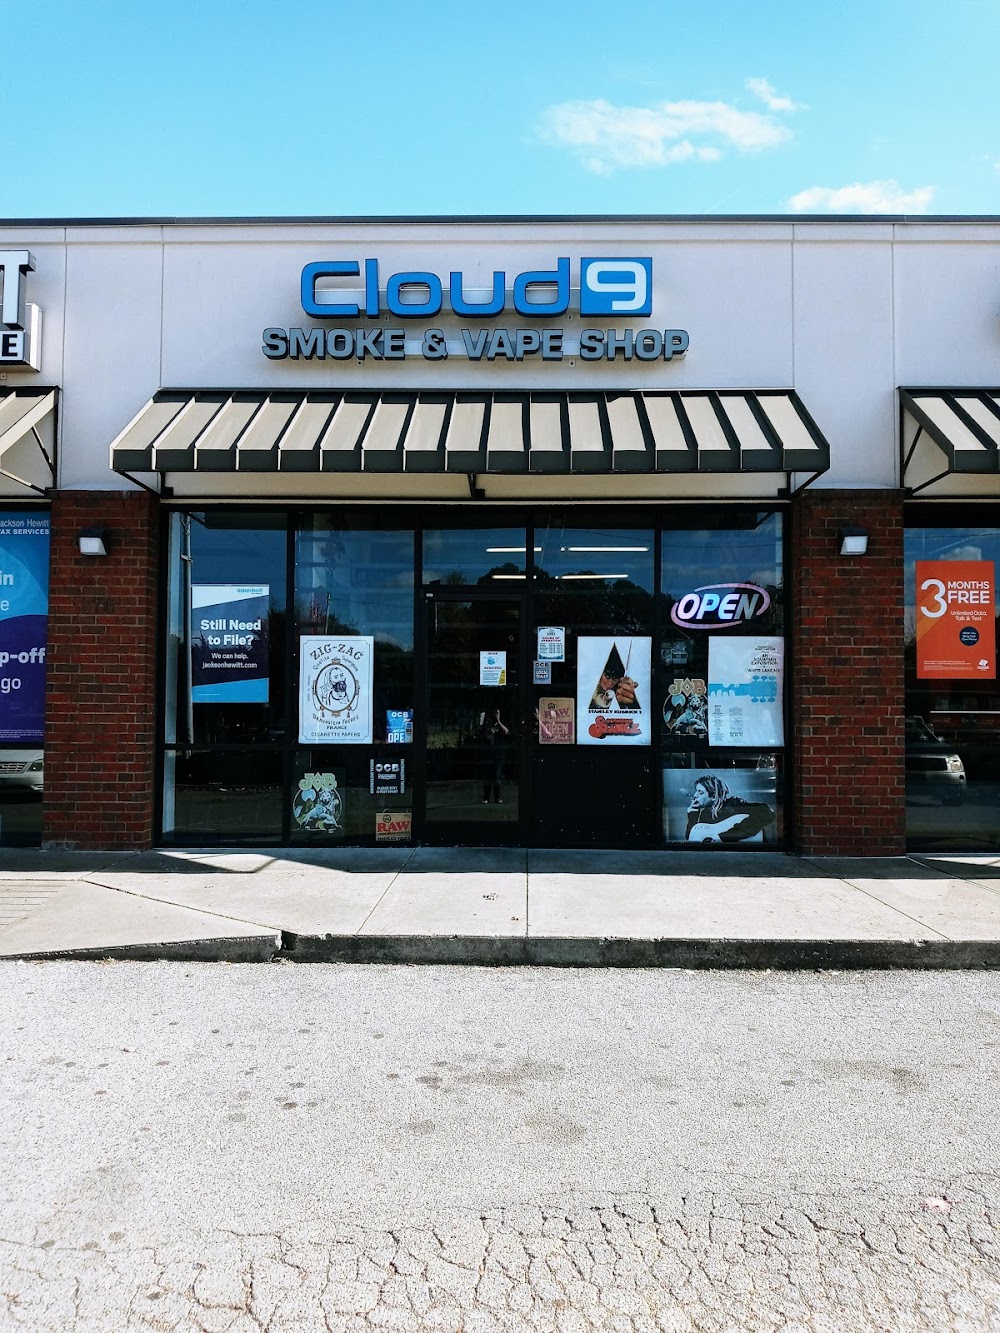 Cloud 9 Smoke & Vape Shop